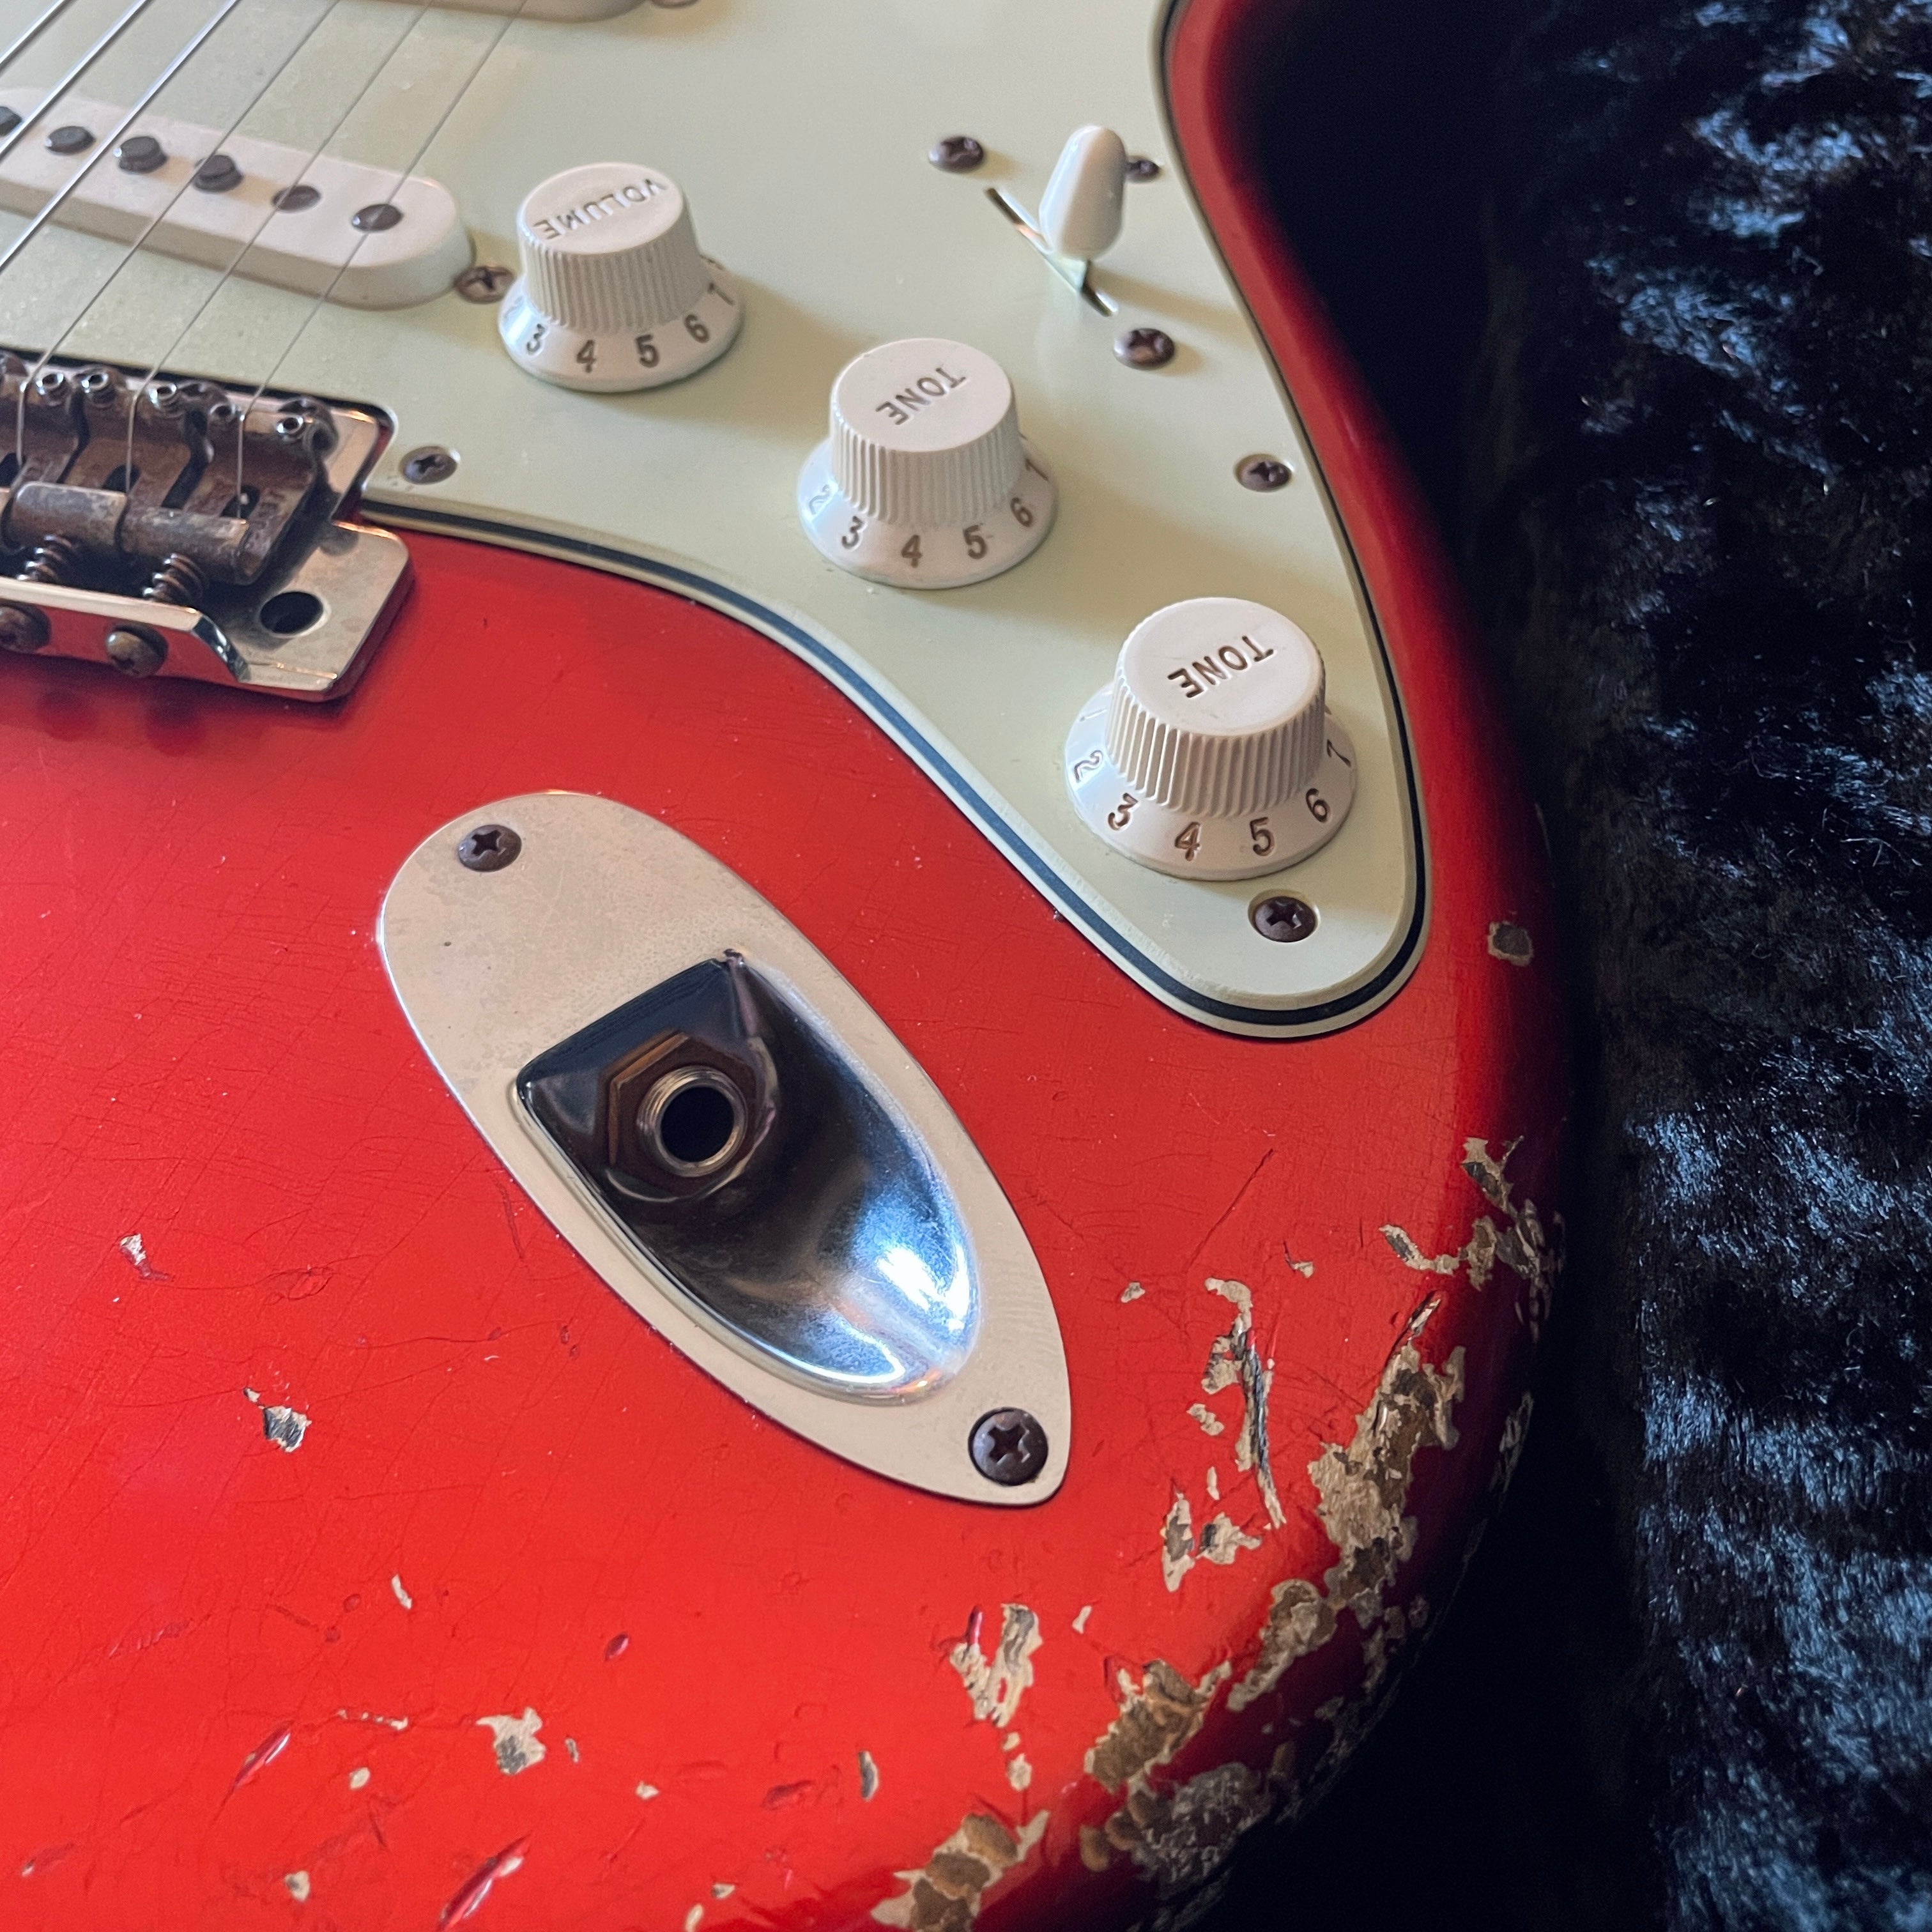 Custom Shop ‘65 Stratocaster Relic